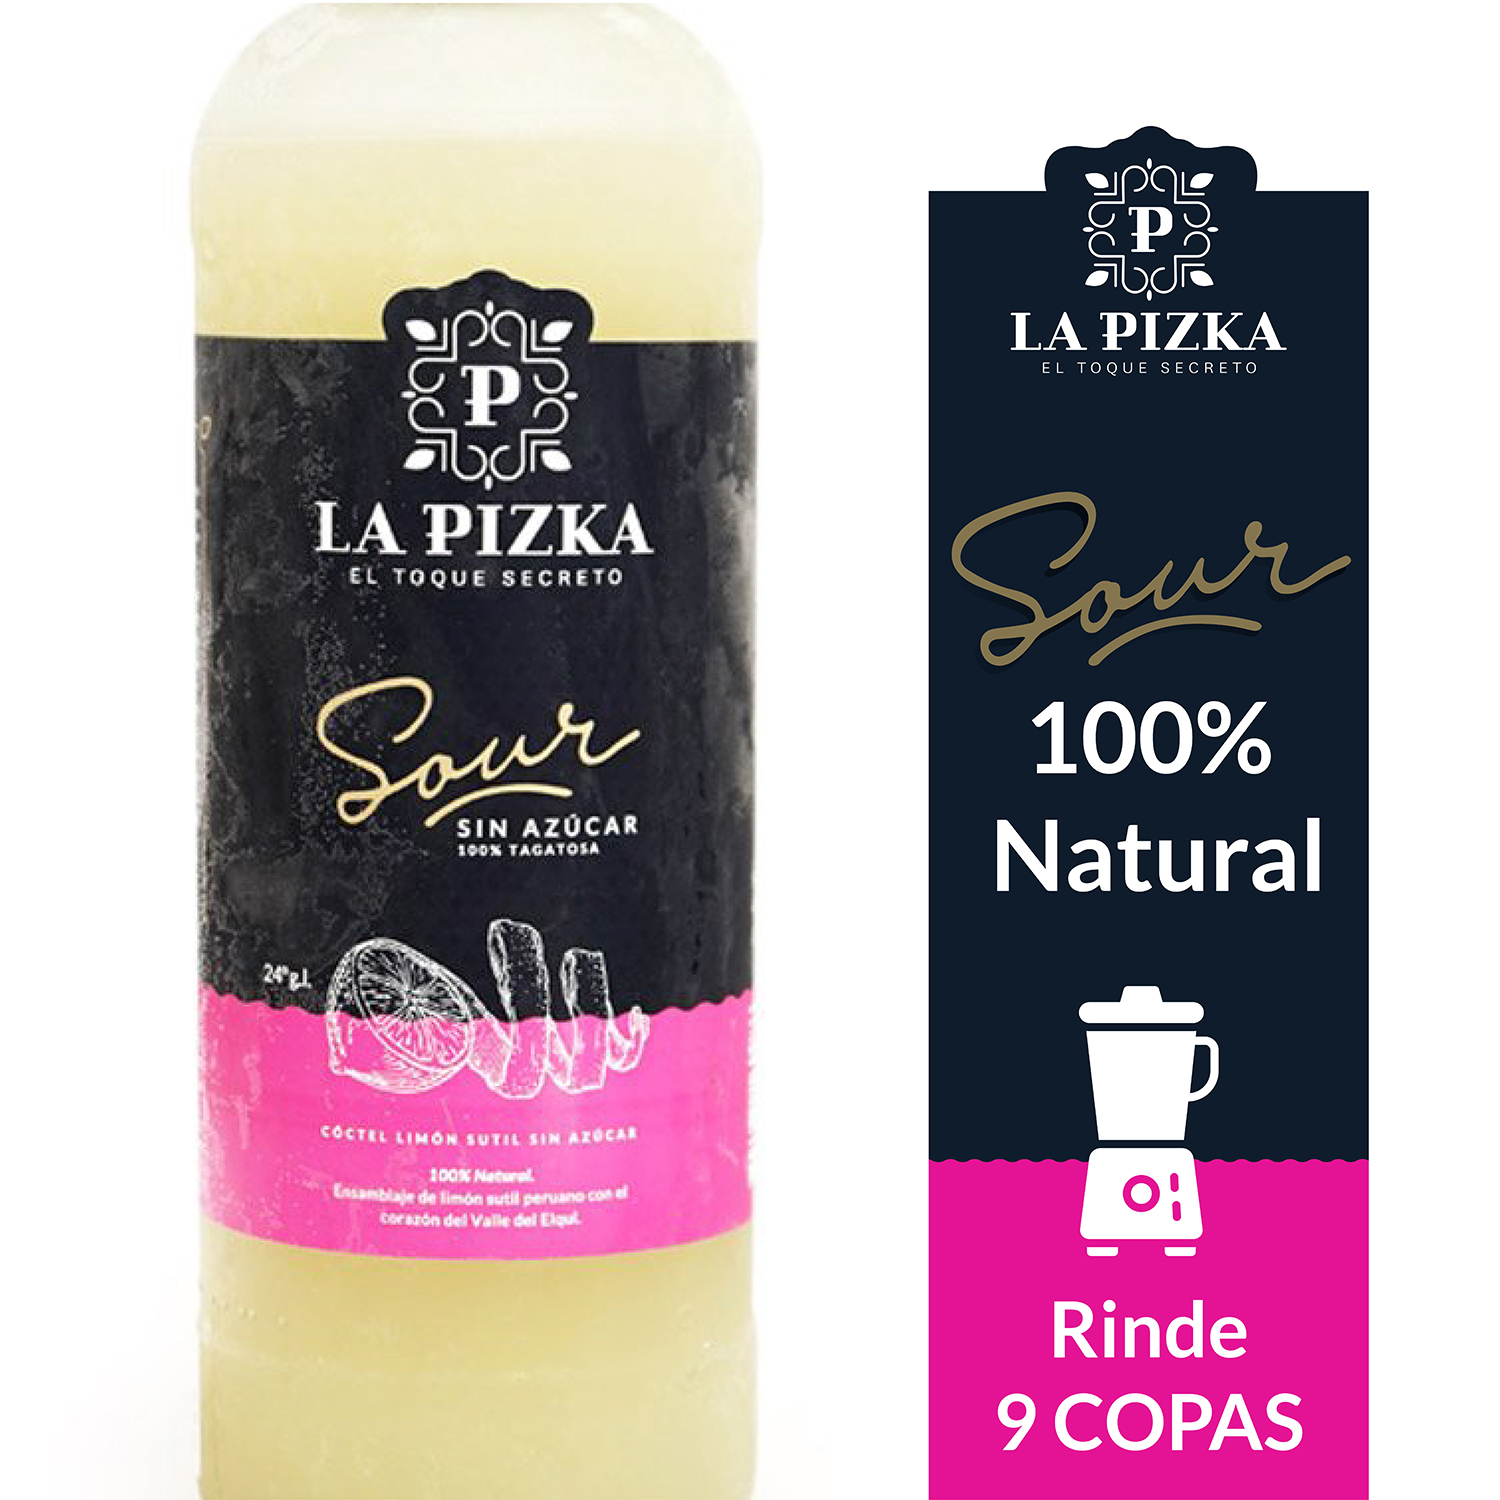 Pisco Sour La Pizka – Sin Azúcar 1L